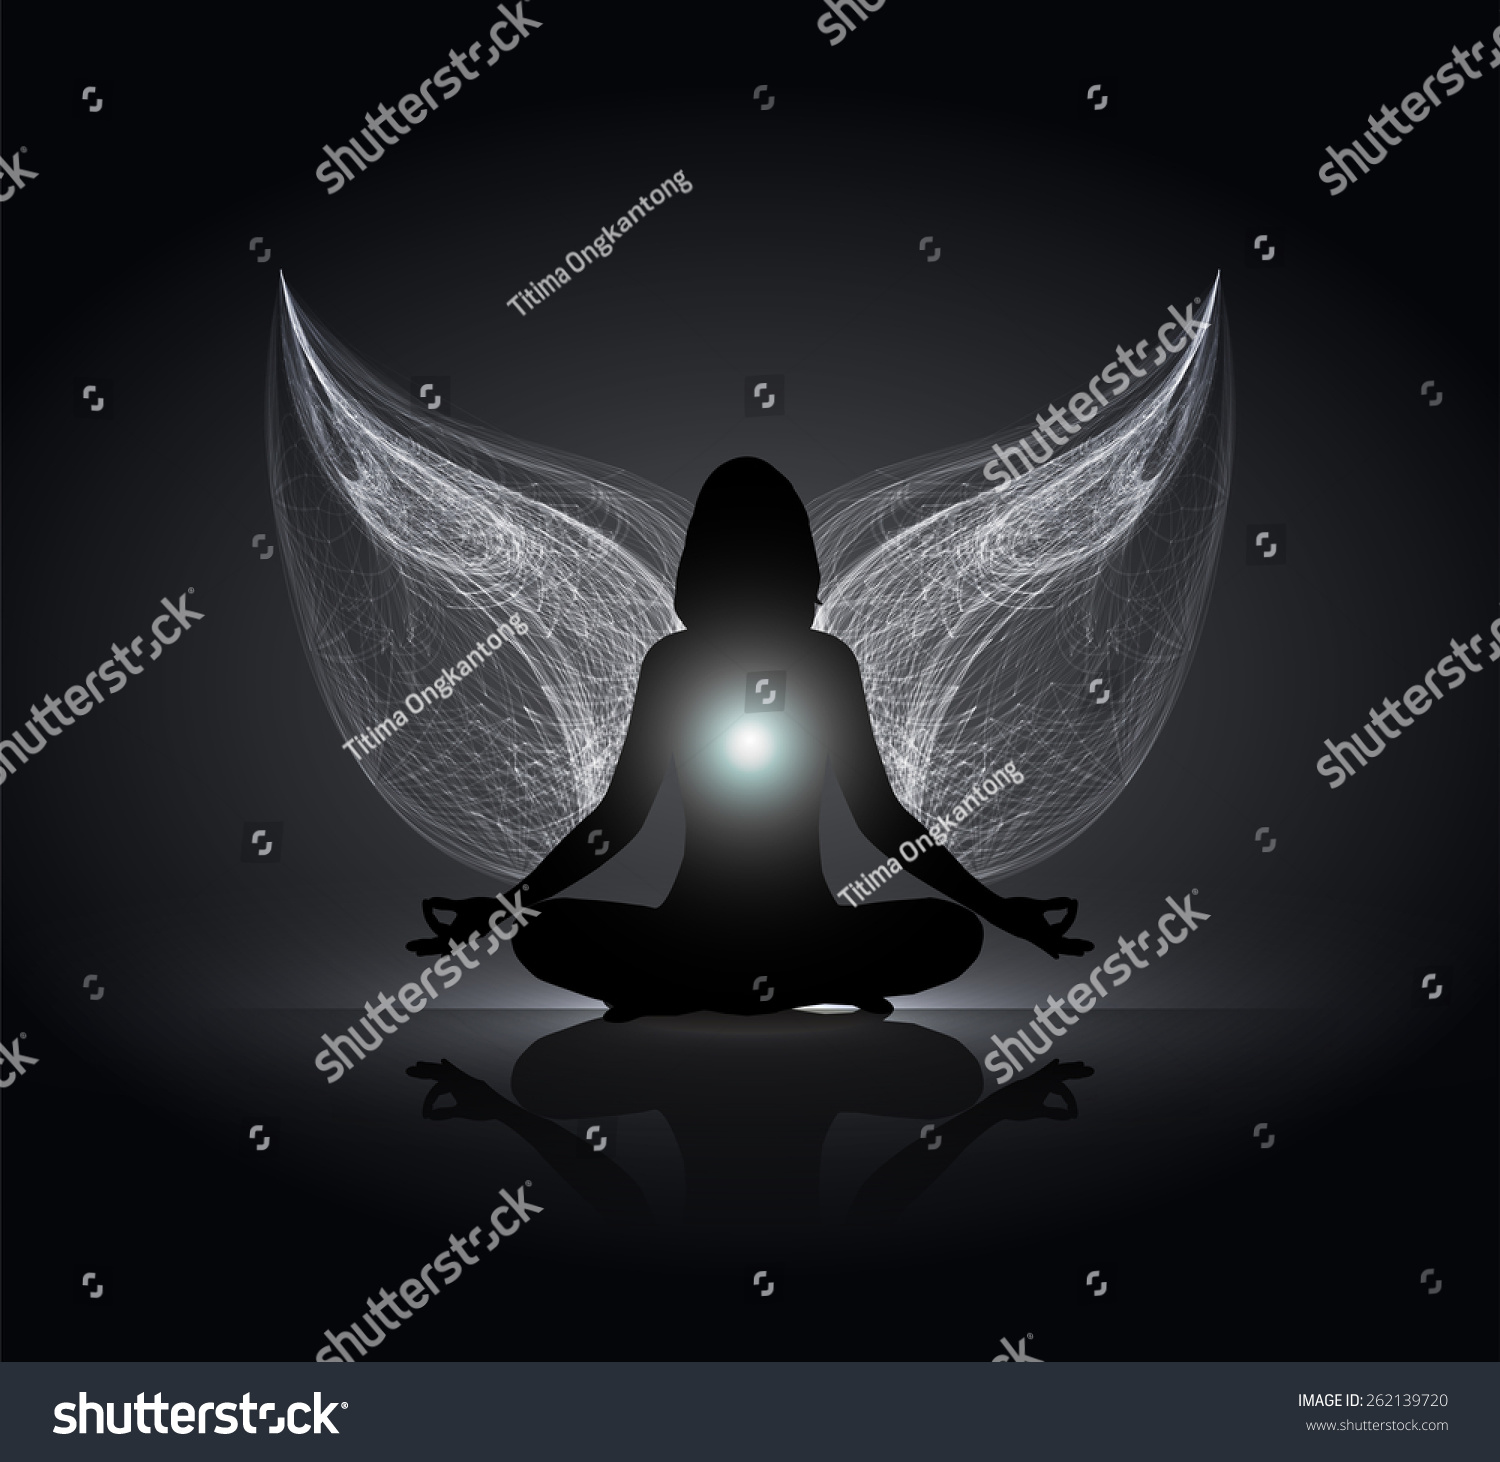 Woman Meditate Yoga Angel Wings Black Stock Vector Royalty Free 262139720 Shutterstock 8204